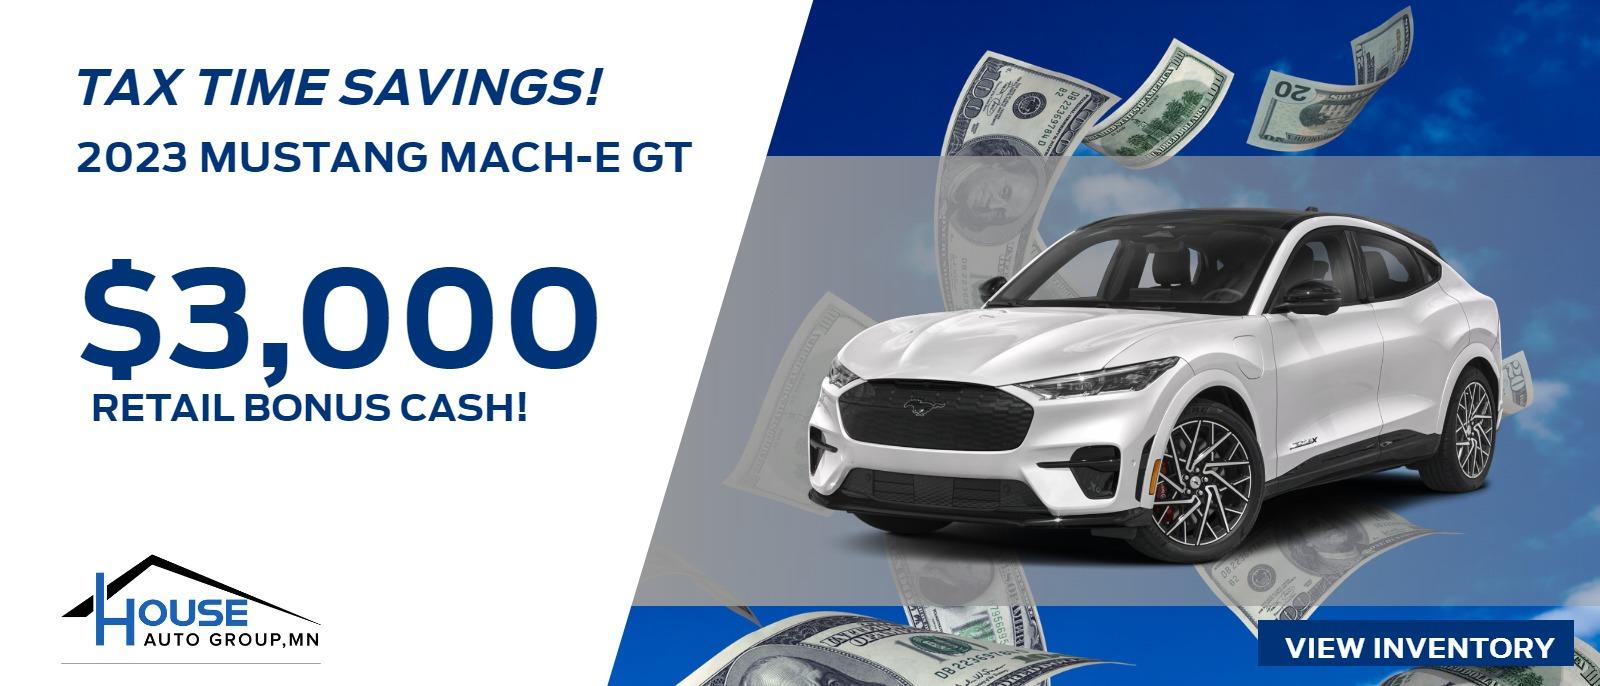 2023 Mustang Mach-E GT - $3,000 Retail Bonus Cash!